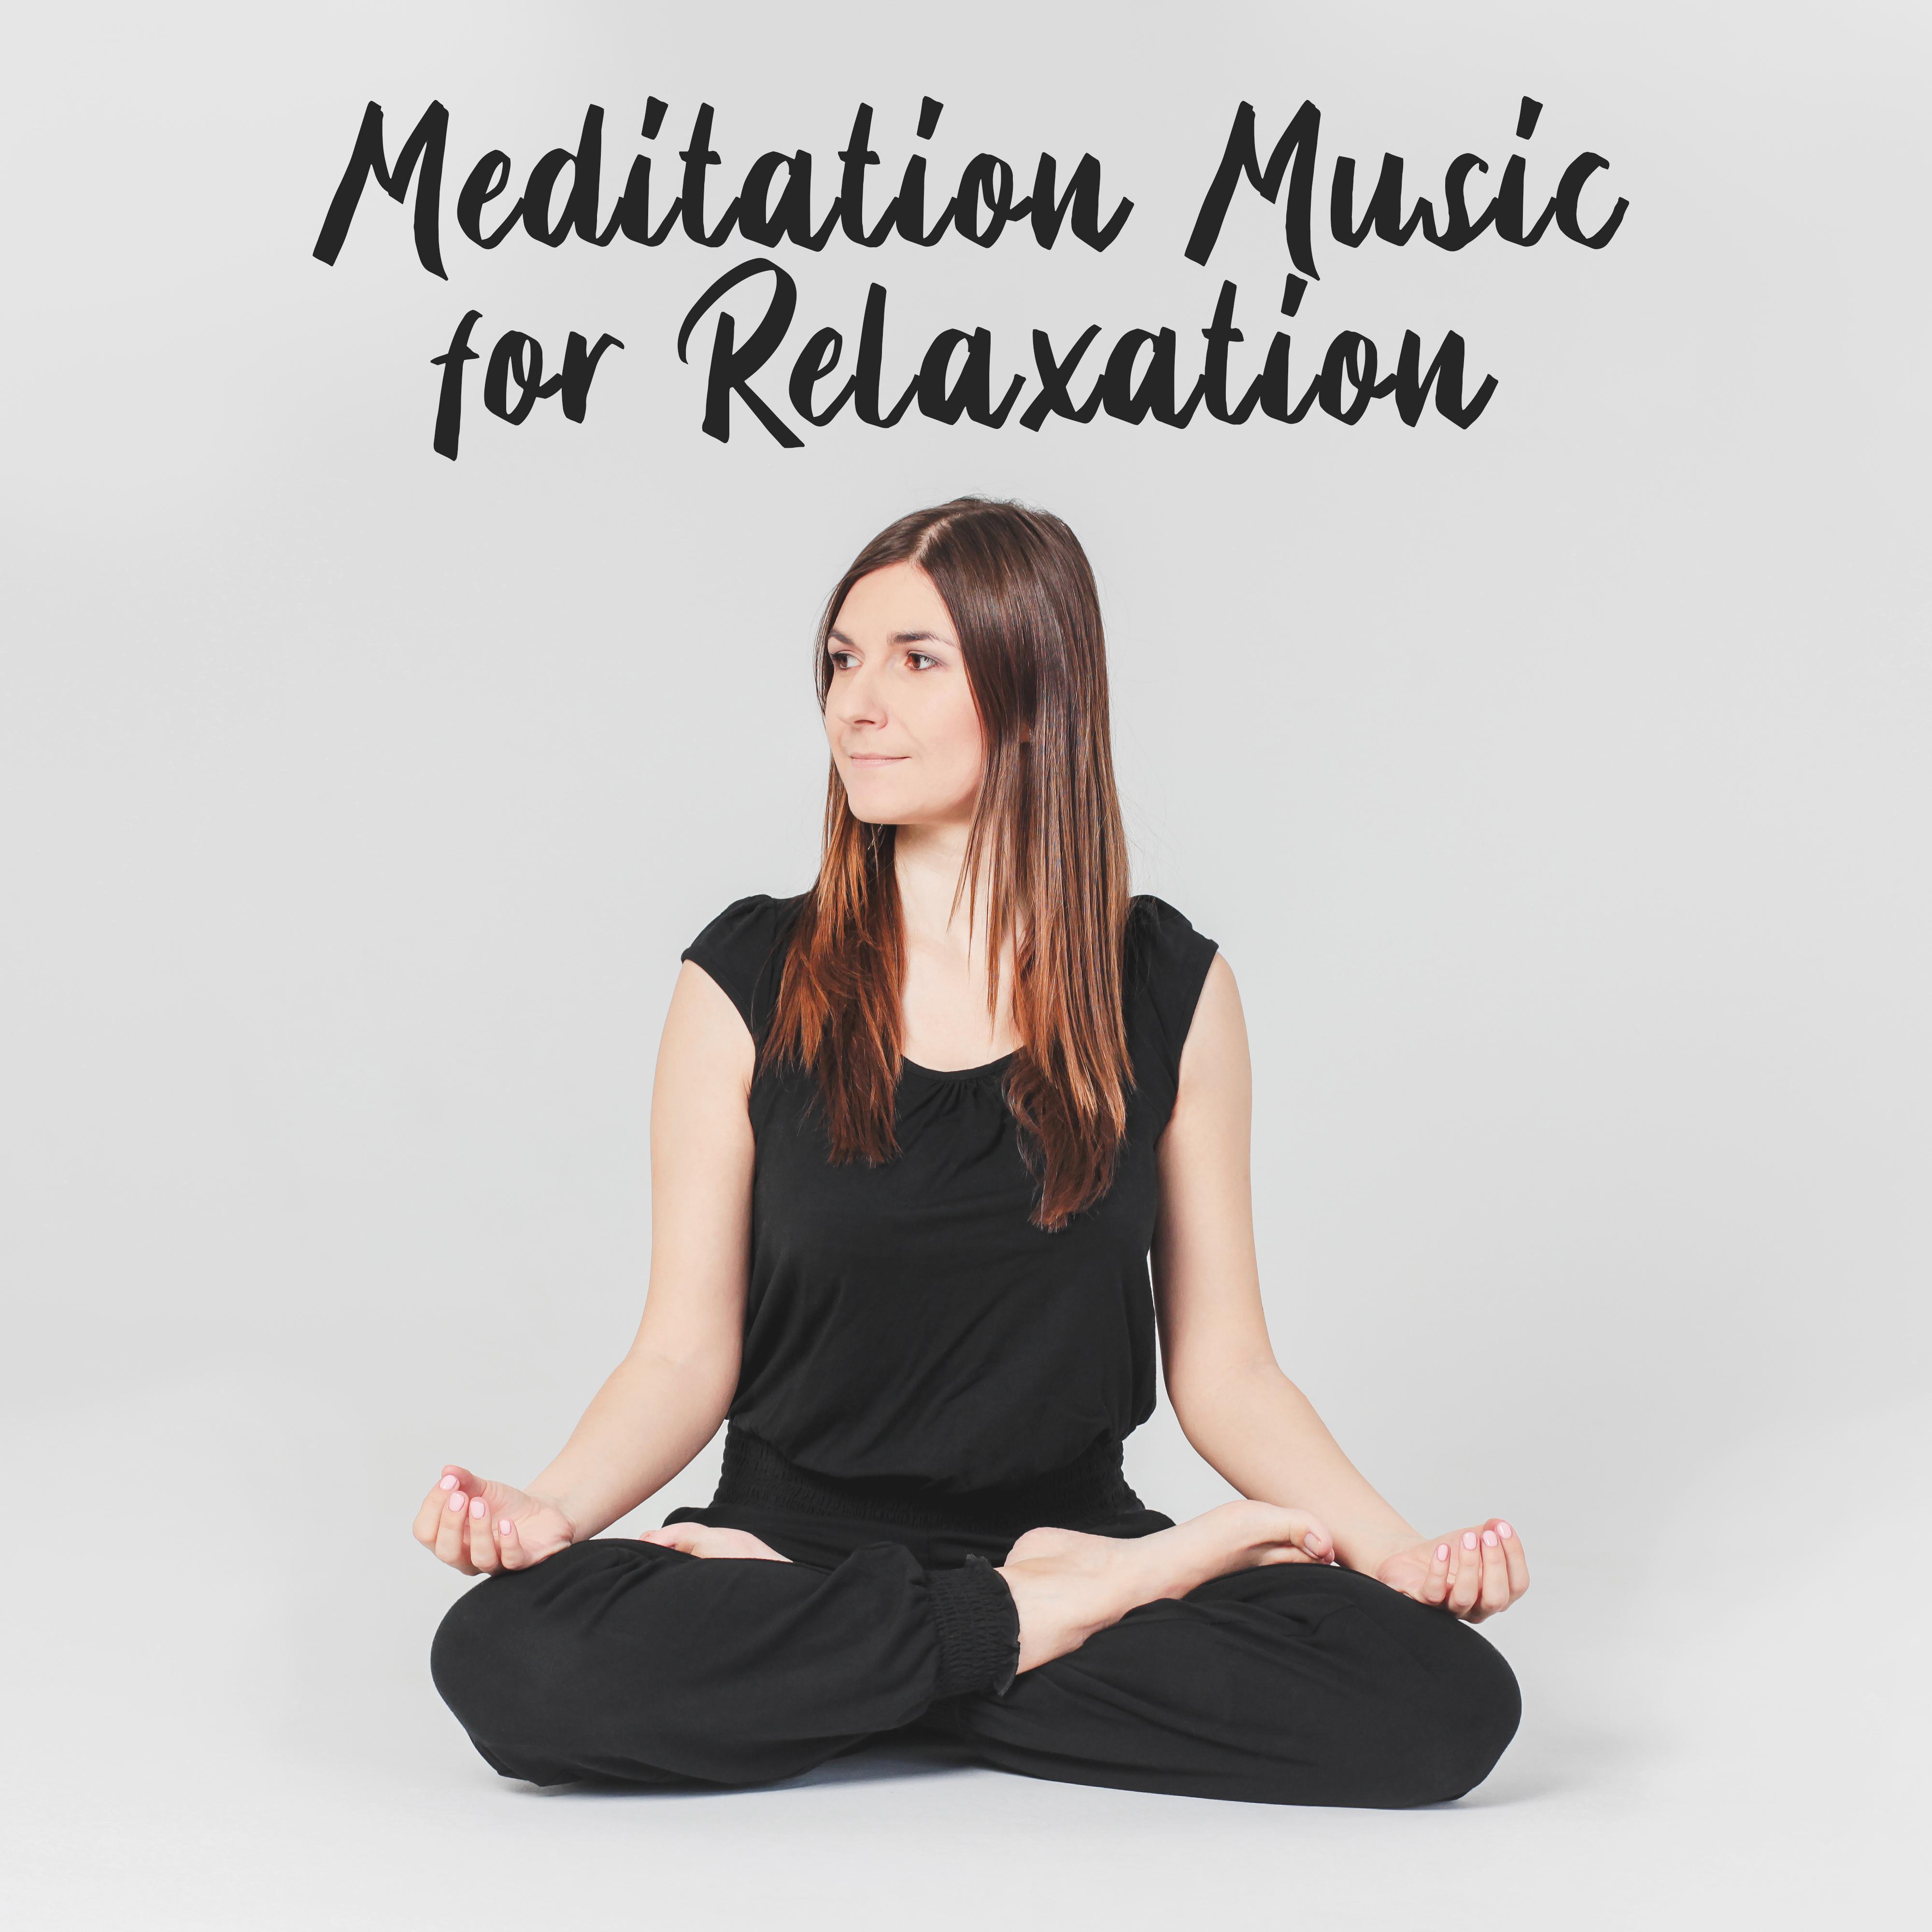 Meditation Music for Relaxation – Blissful Yoga, Healing Music to Calm Down, Mindful Meditation, Yoga Zen, Meditation Hits 2019